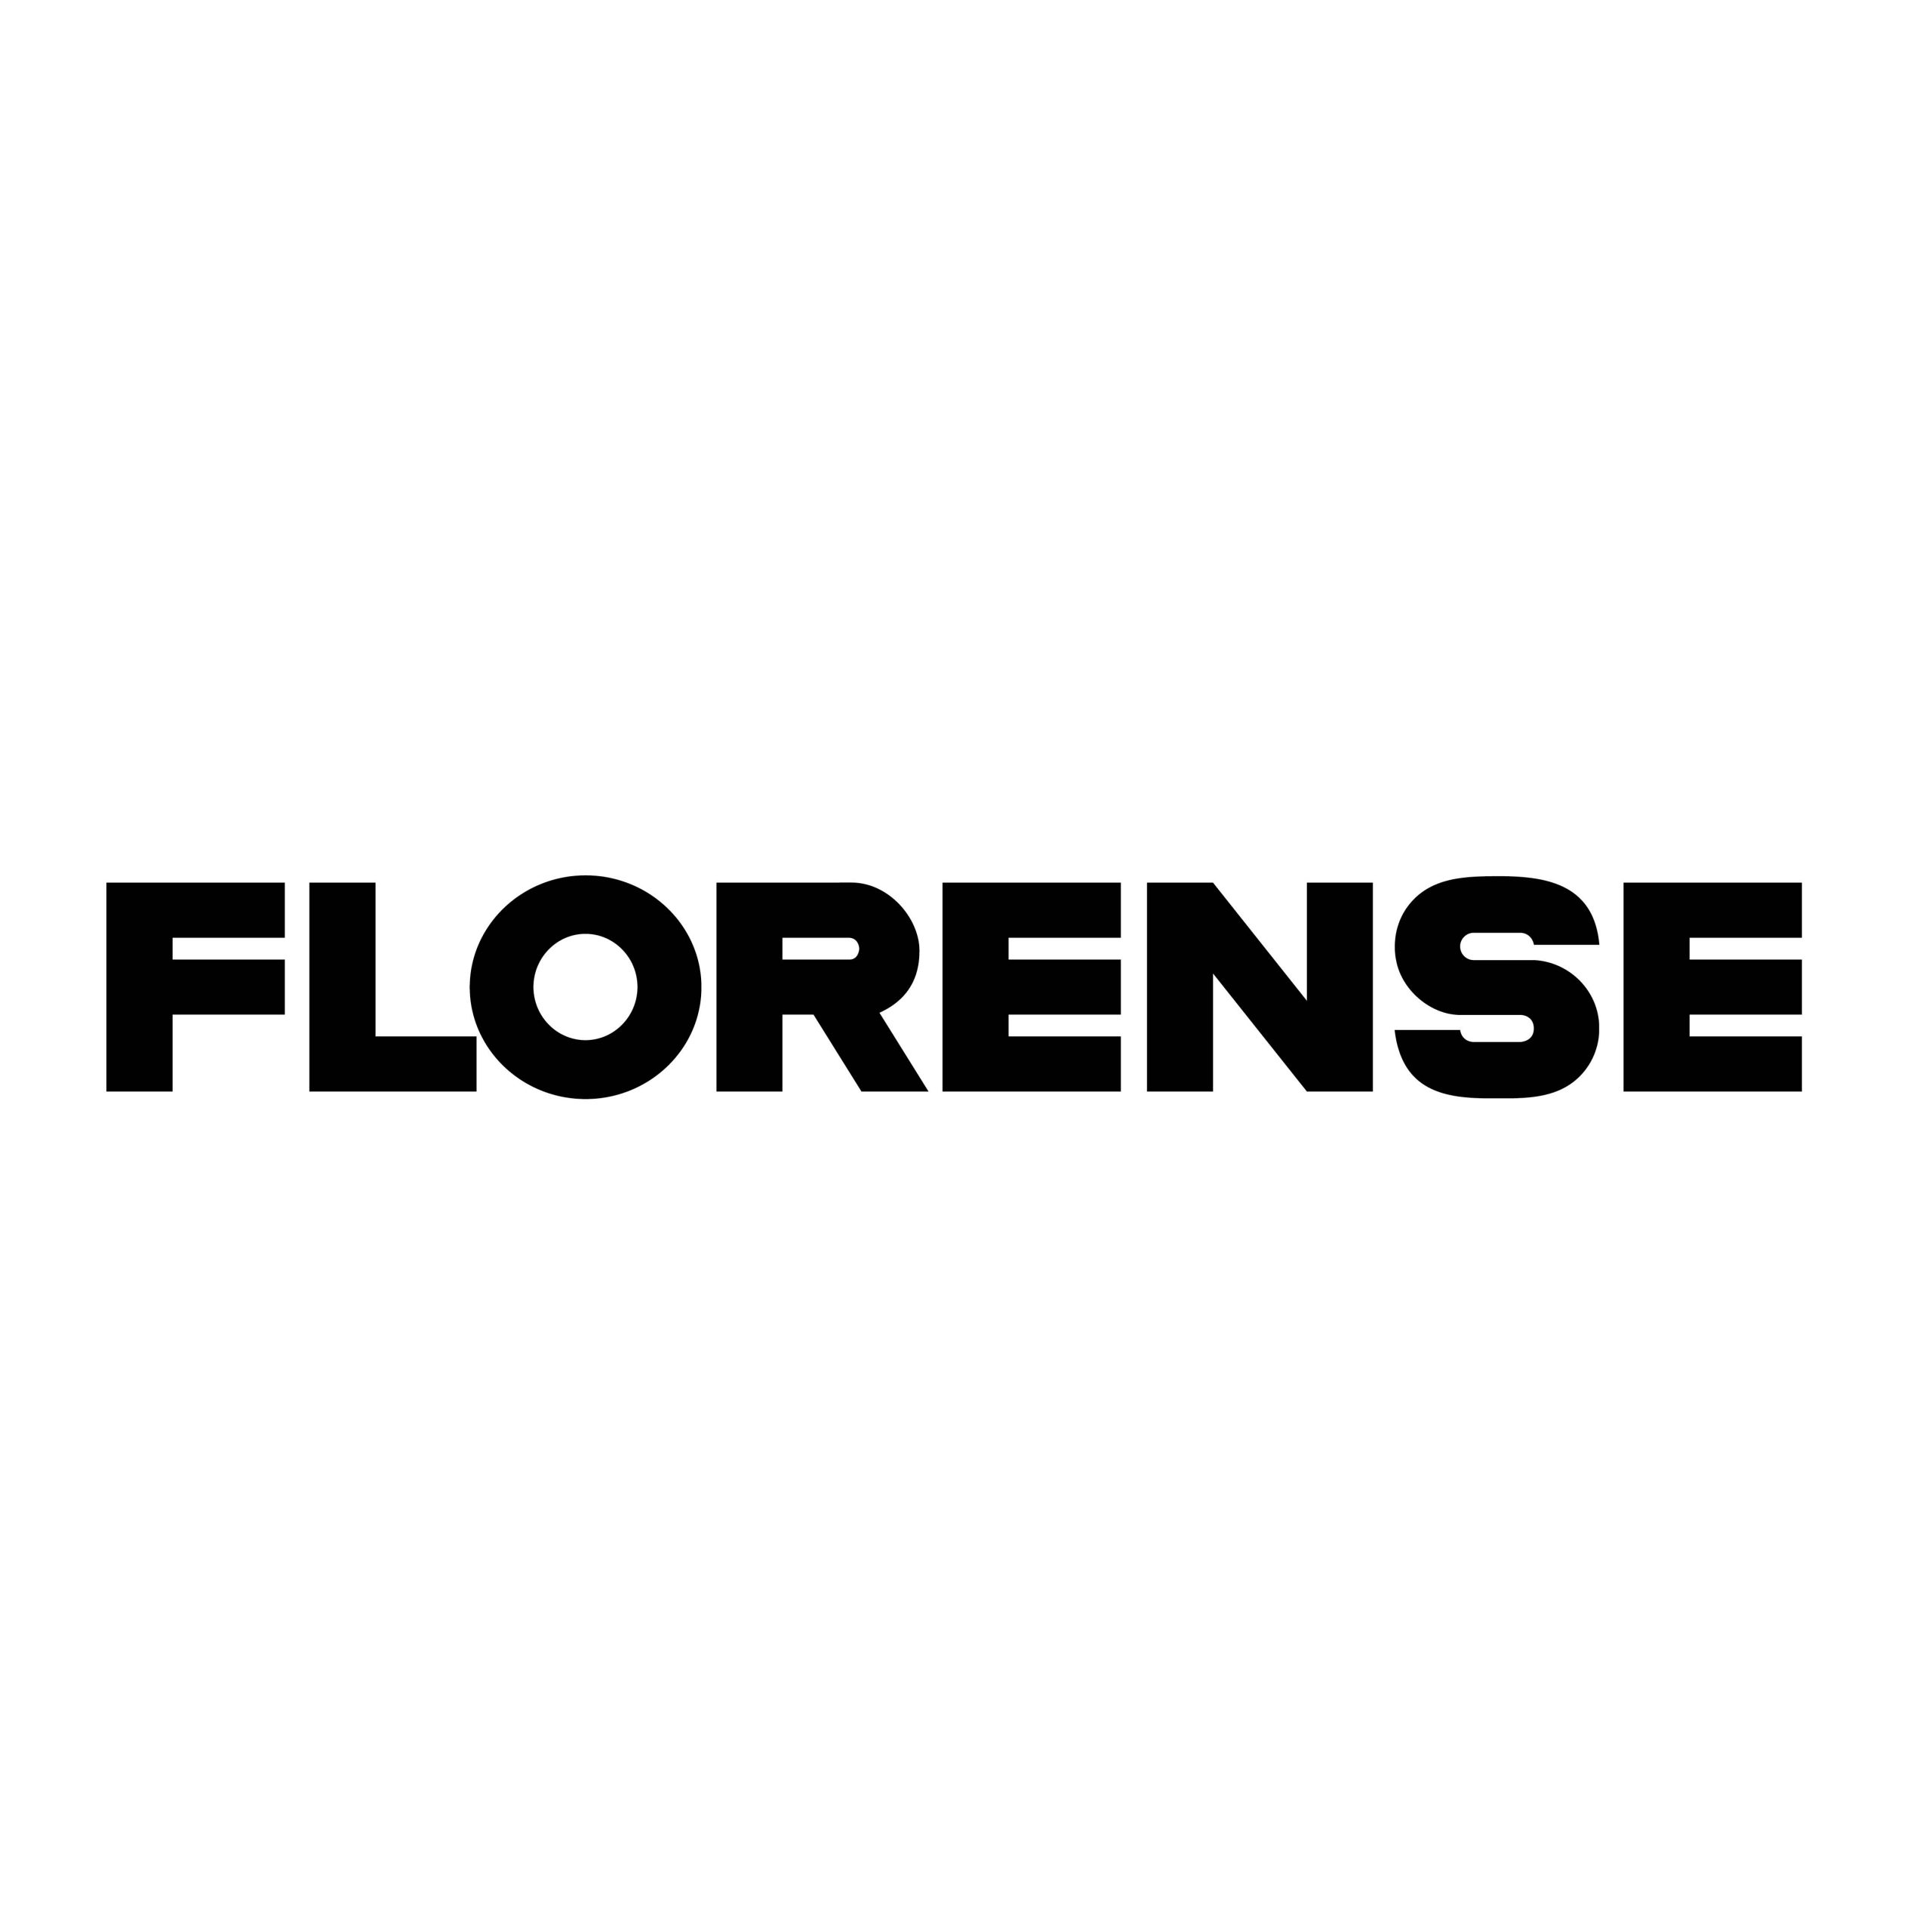 Florense